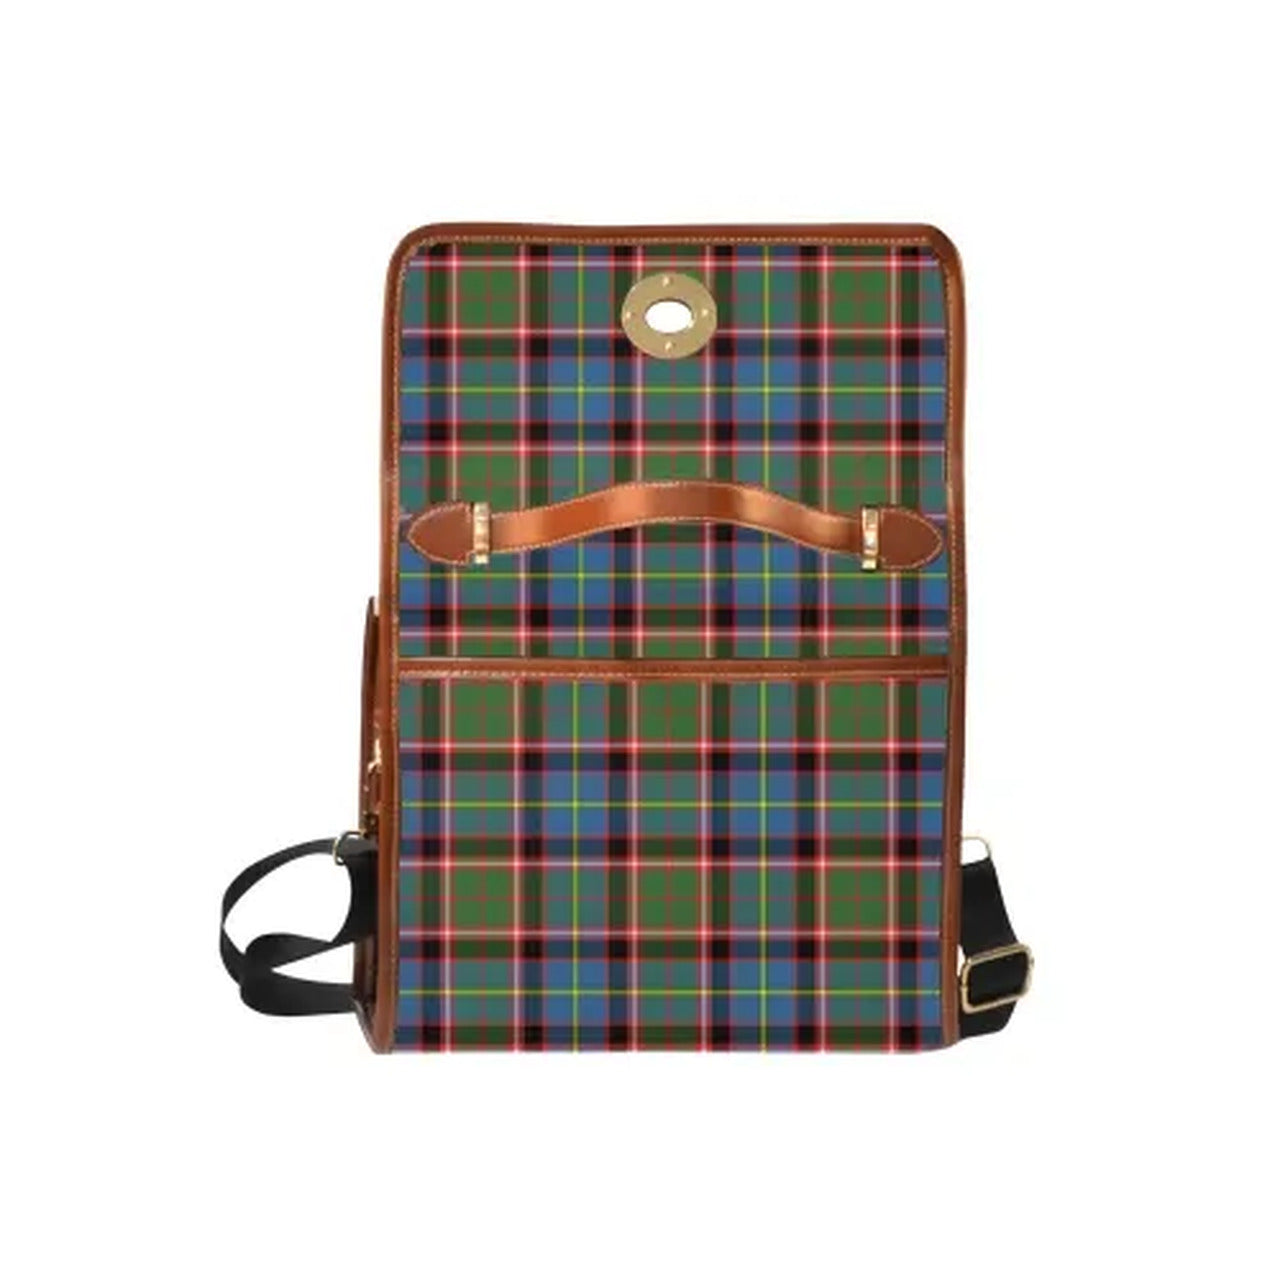 Stirling (of Cadder-Present Chief) Tartan Canvas Bag